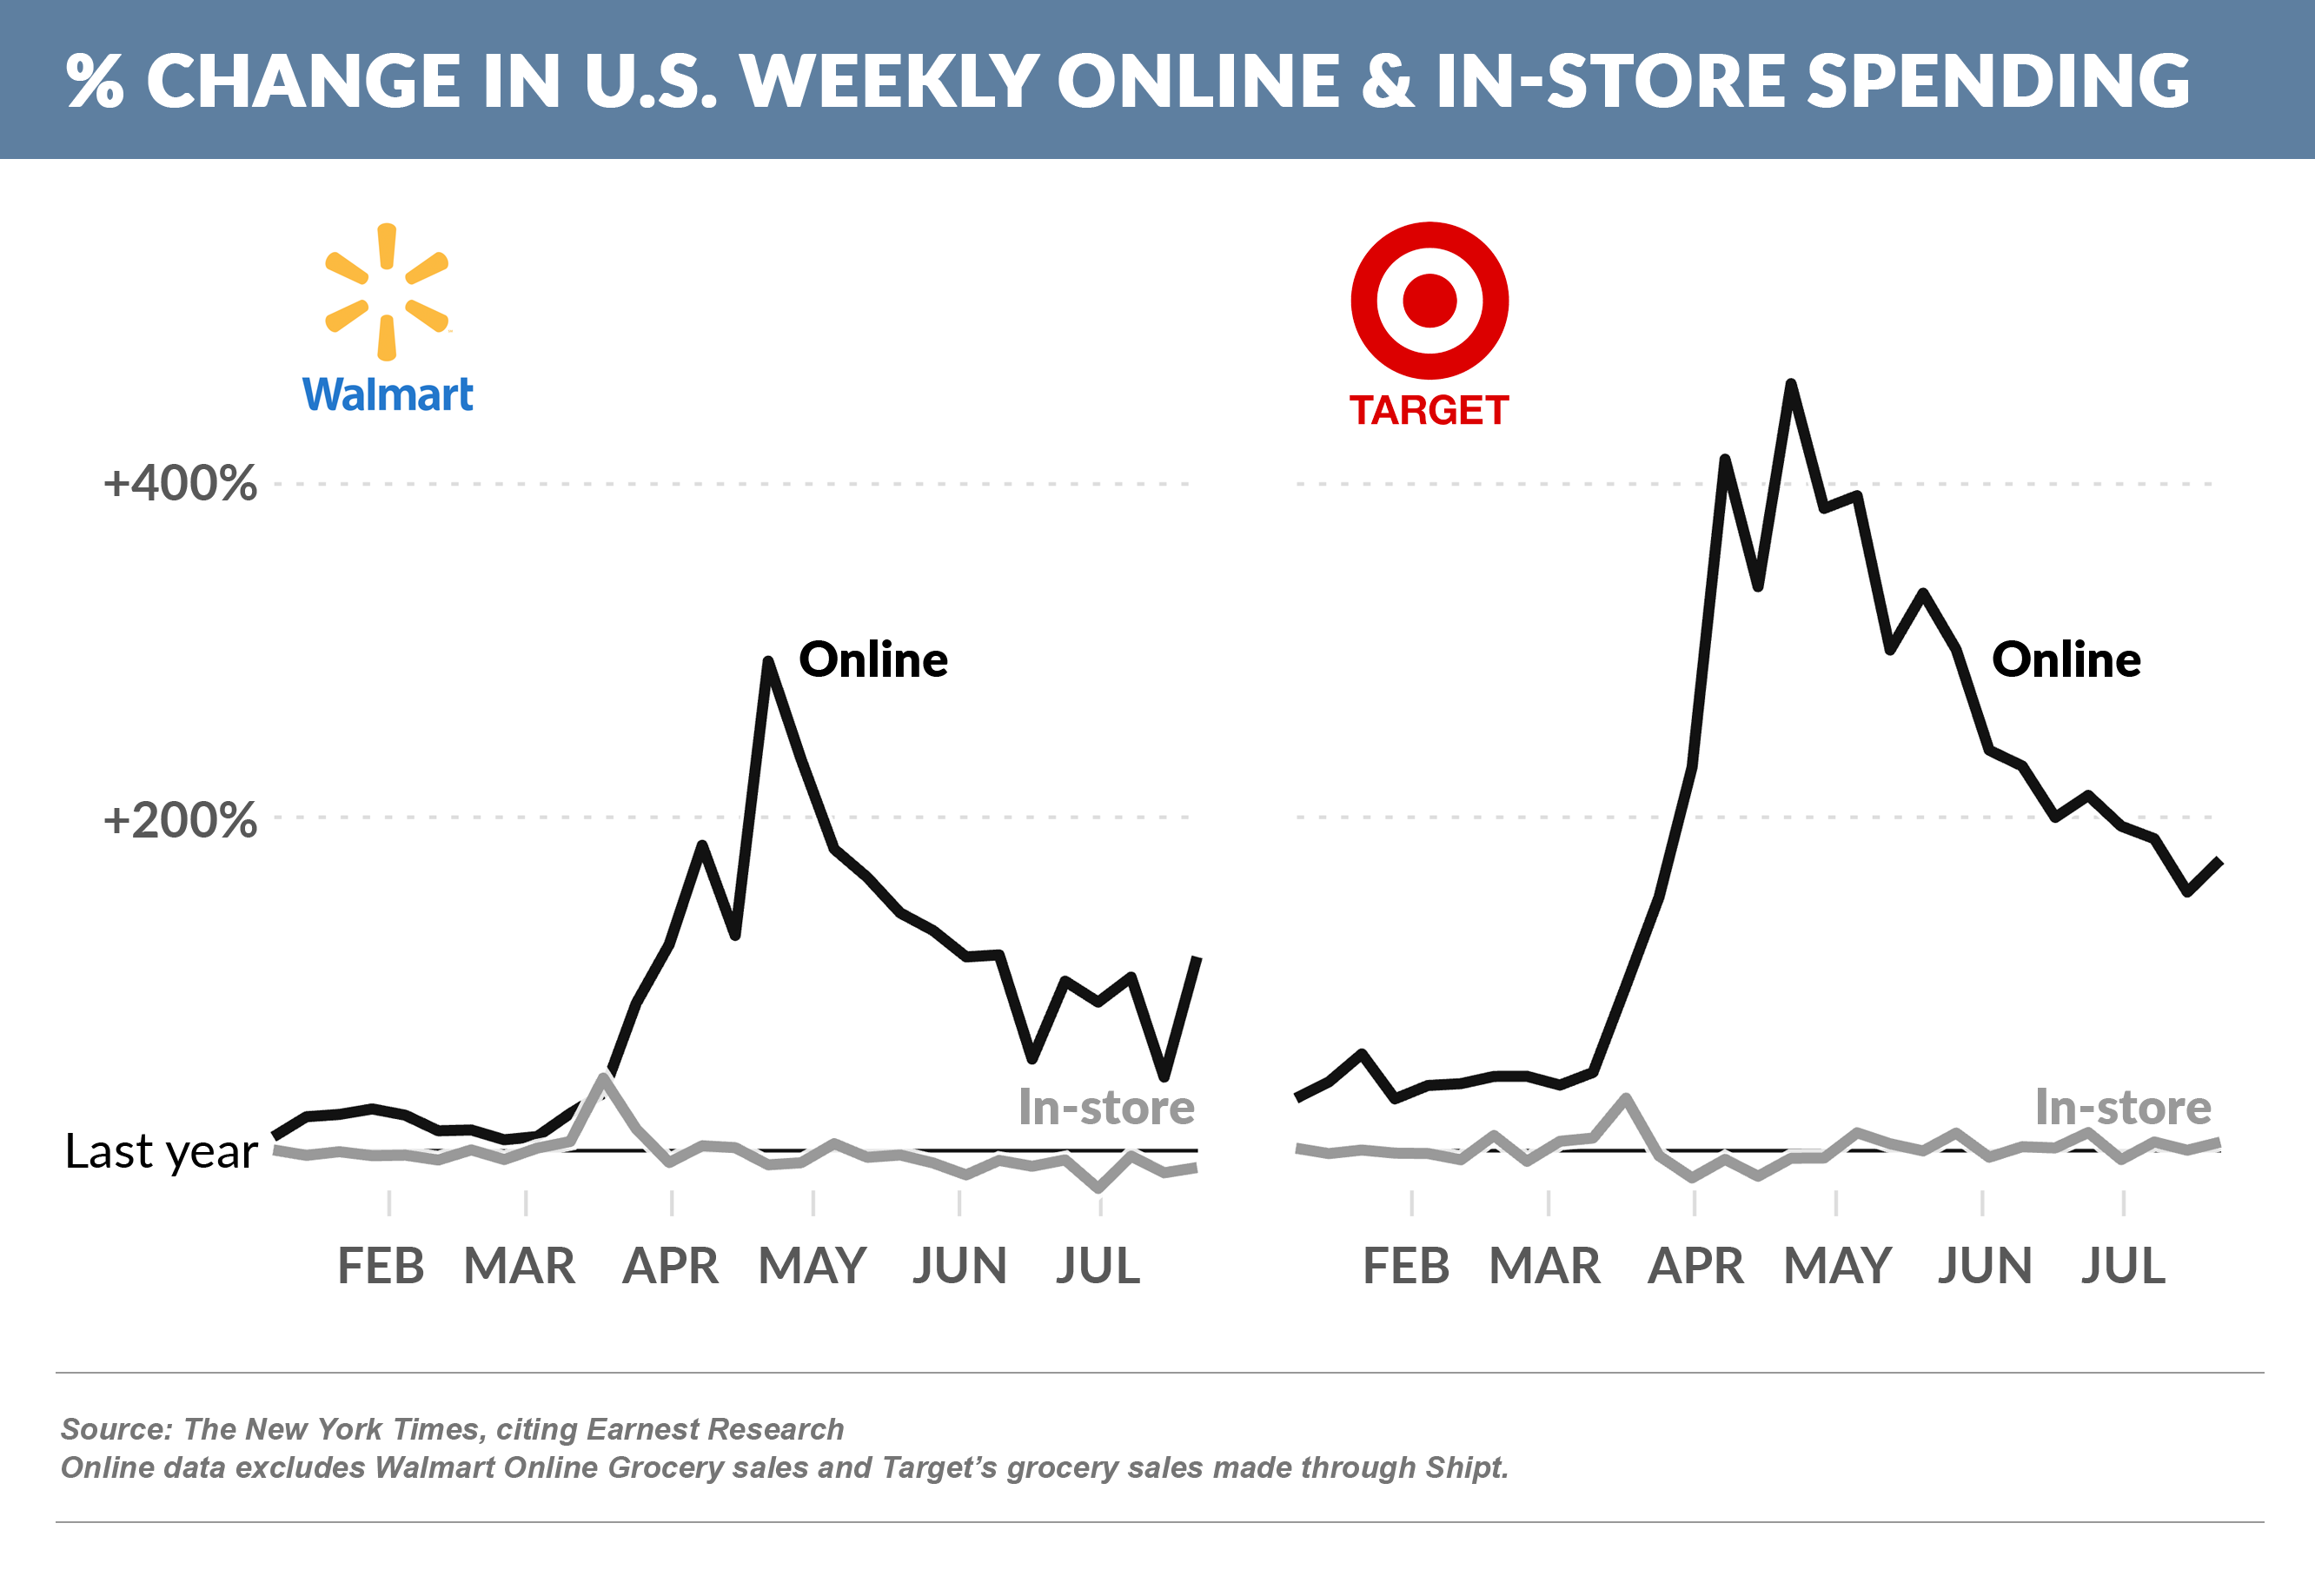 % change in U.S. weekly online & in-store spending